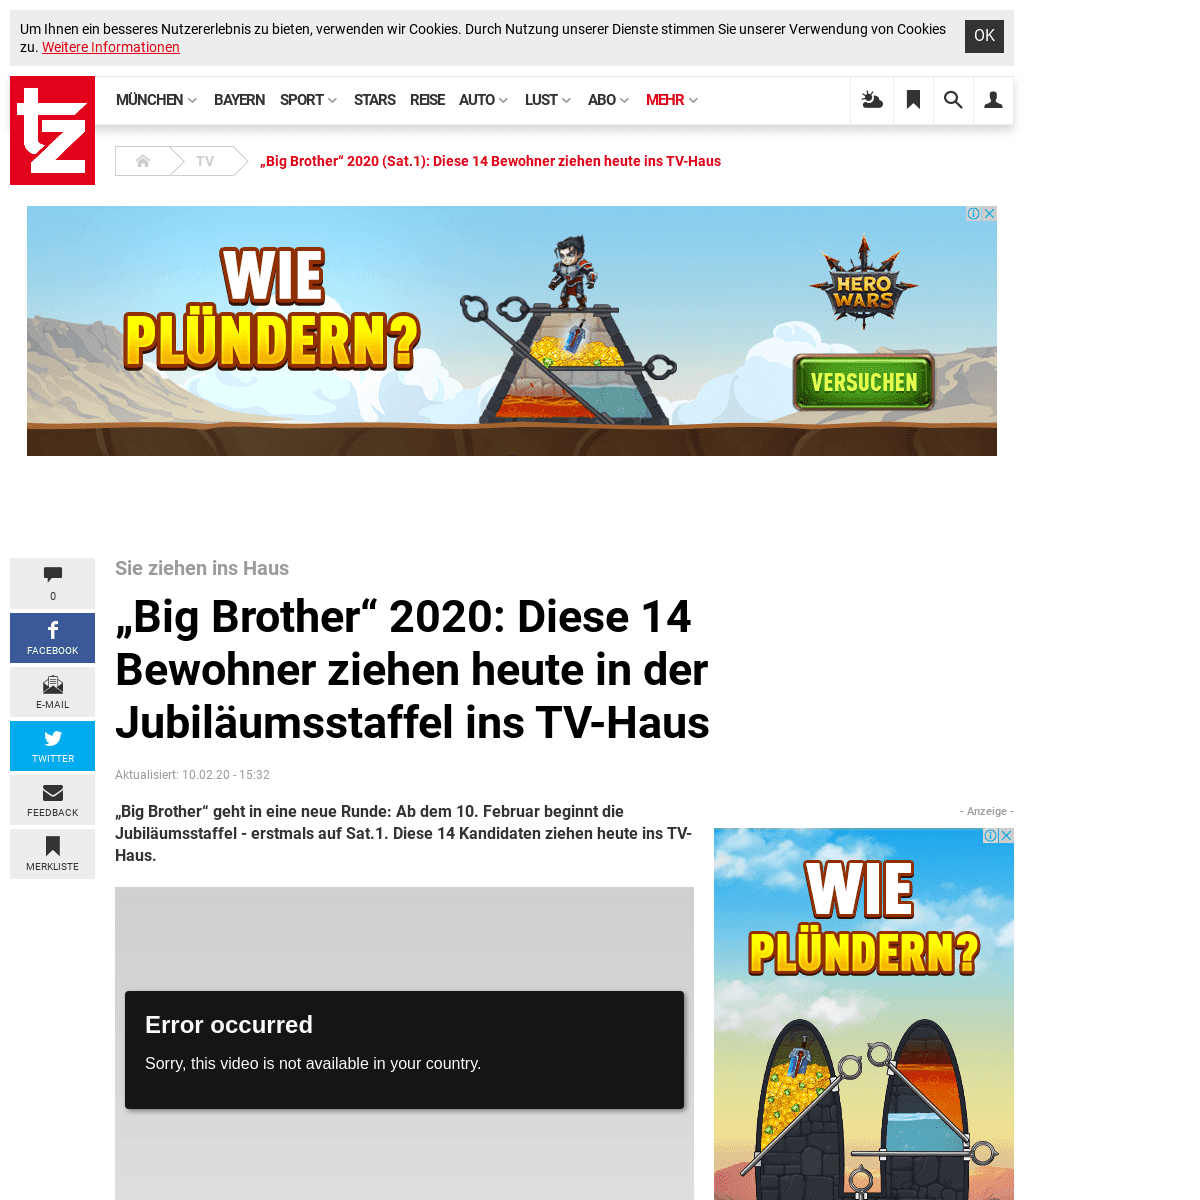 A complete backup of www.tz.de/tv/big-brother-2020-14-kandidaten-sat-1-tv-haus-experiment-jubilaeumsstaffel-bewohner-zr-13528393